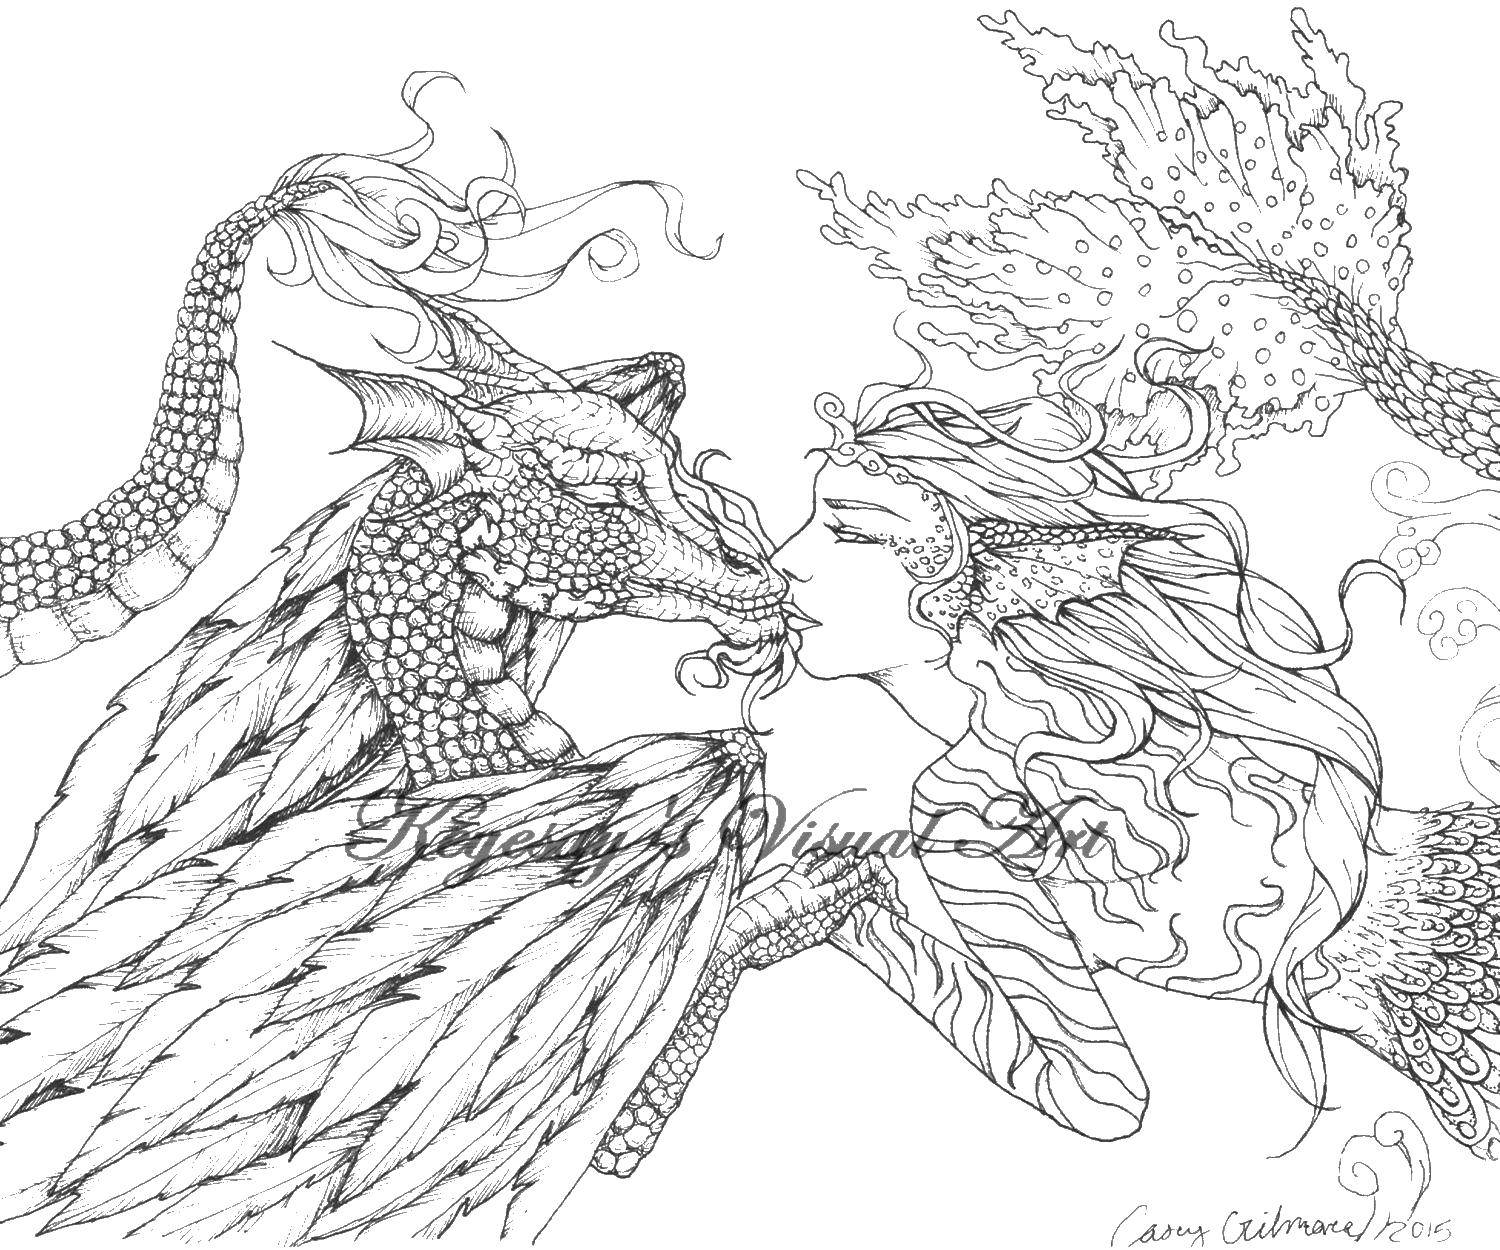 Coloring Girl and the dragon. Category Fantasy. Tags:  fantasy, girl, dragon.